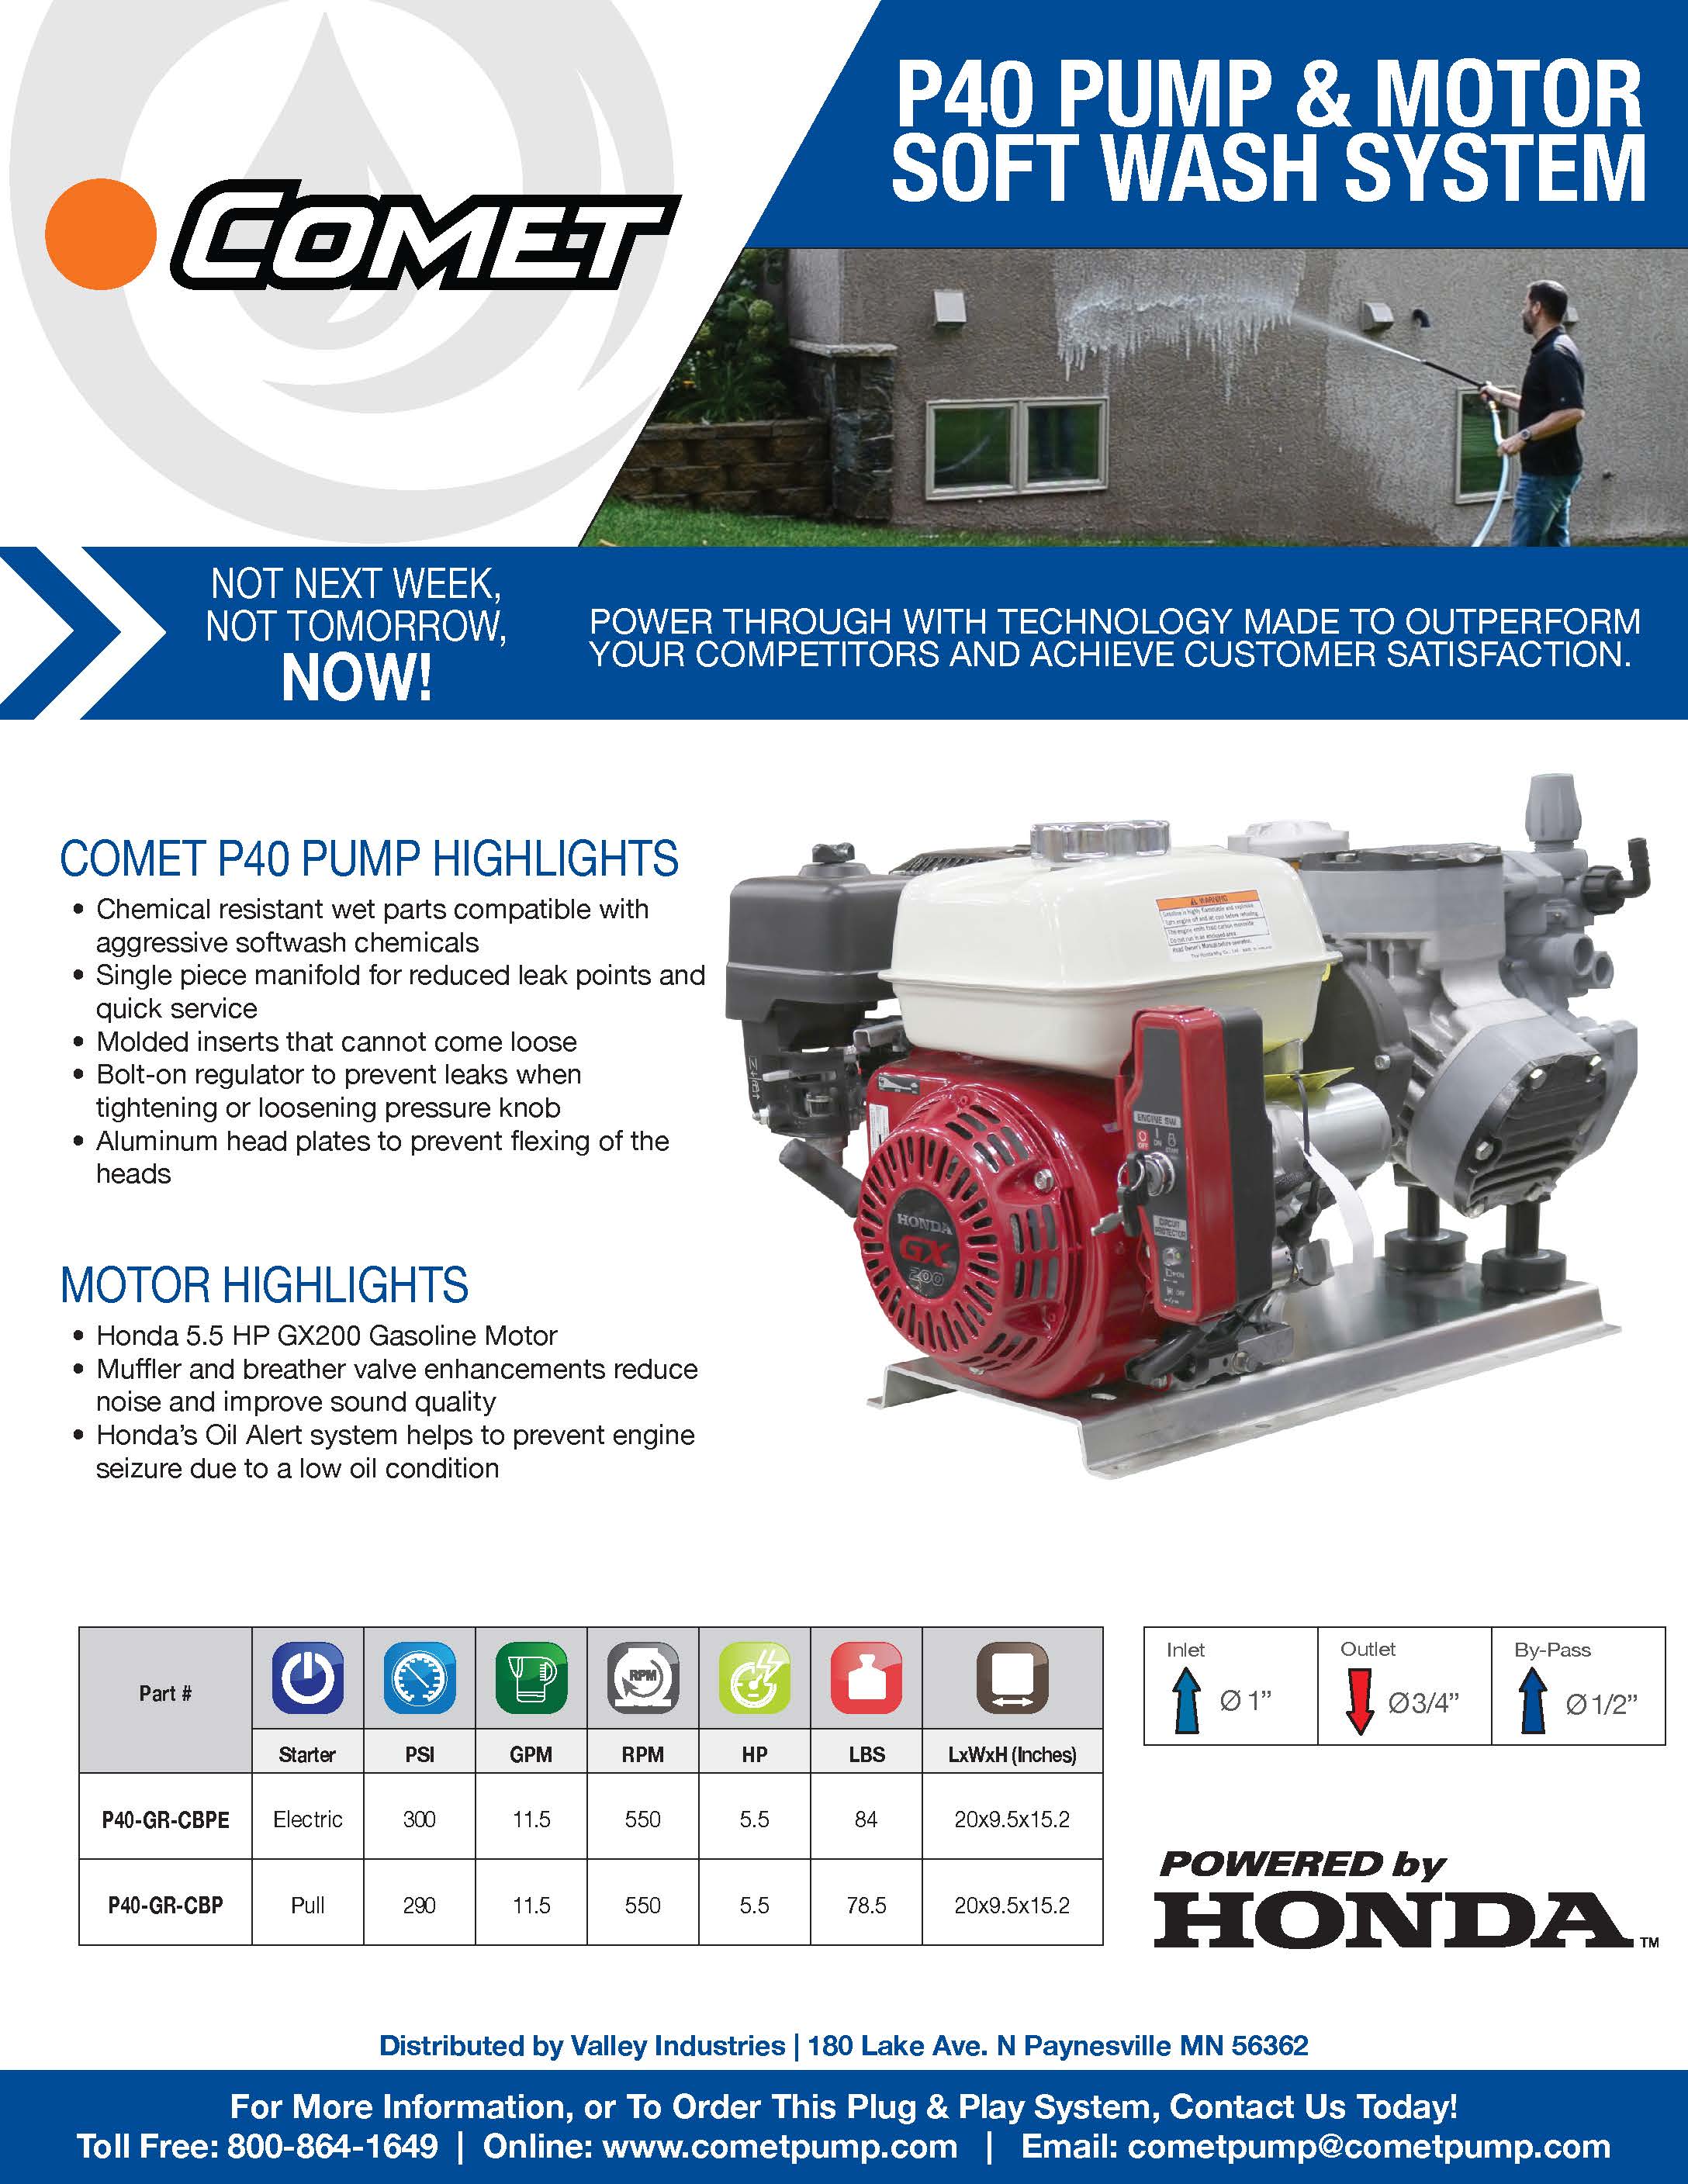 300 PSI @ 11.5 GMP, 550 RPM Honda GX200 w/Gear Reduction Comet Pump Soft Wash System